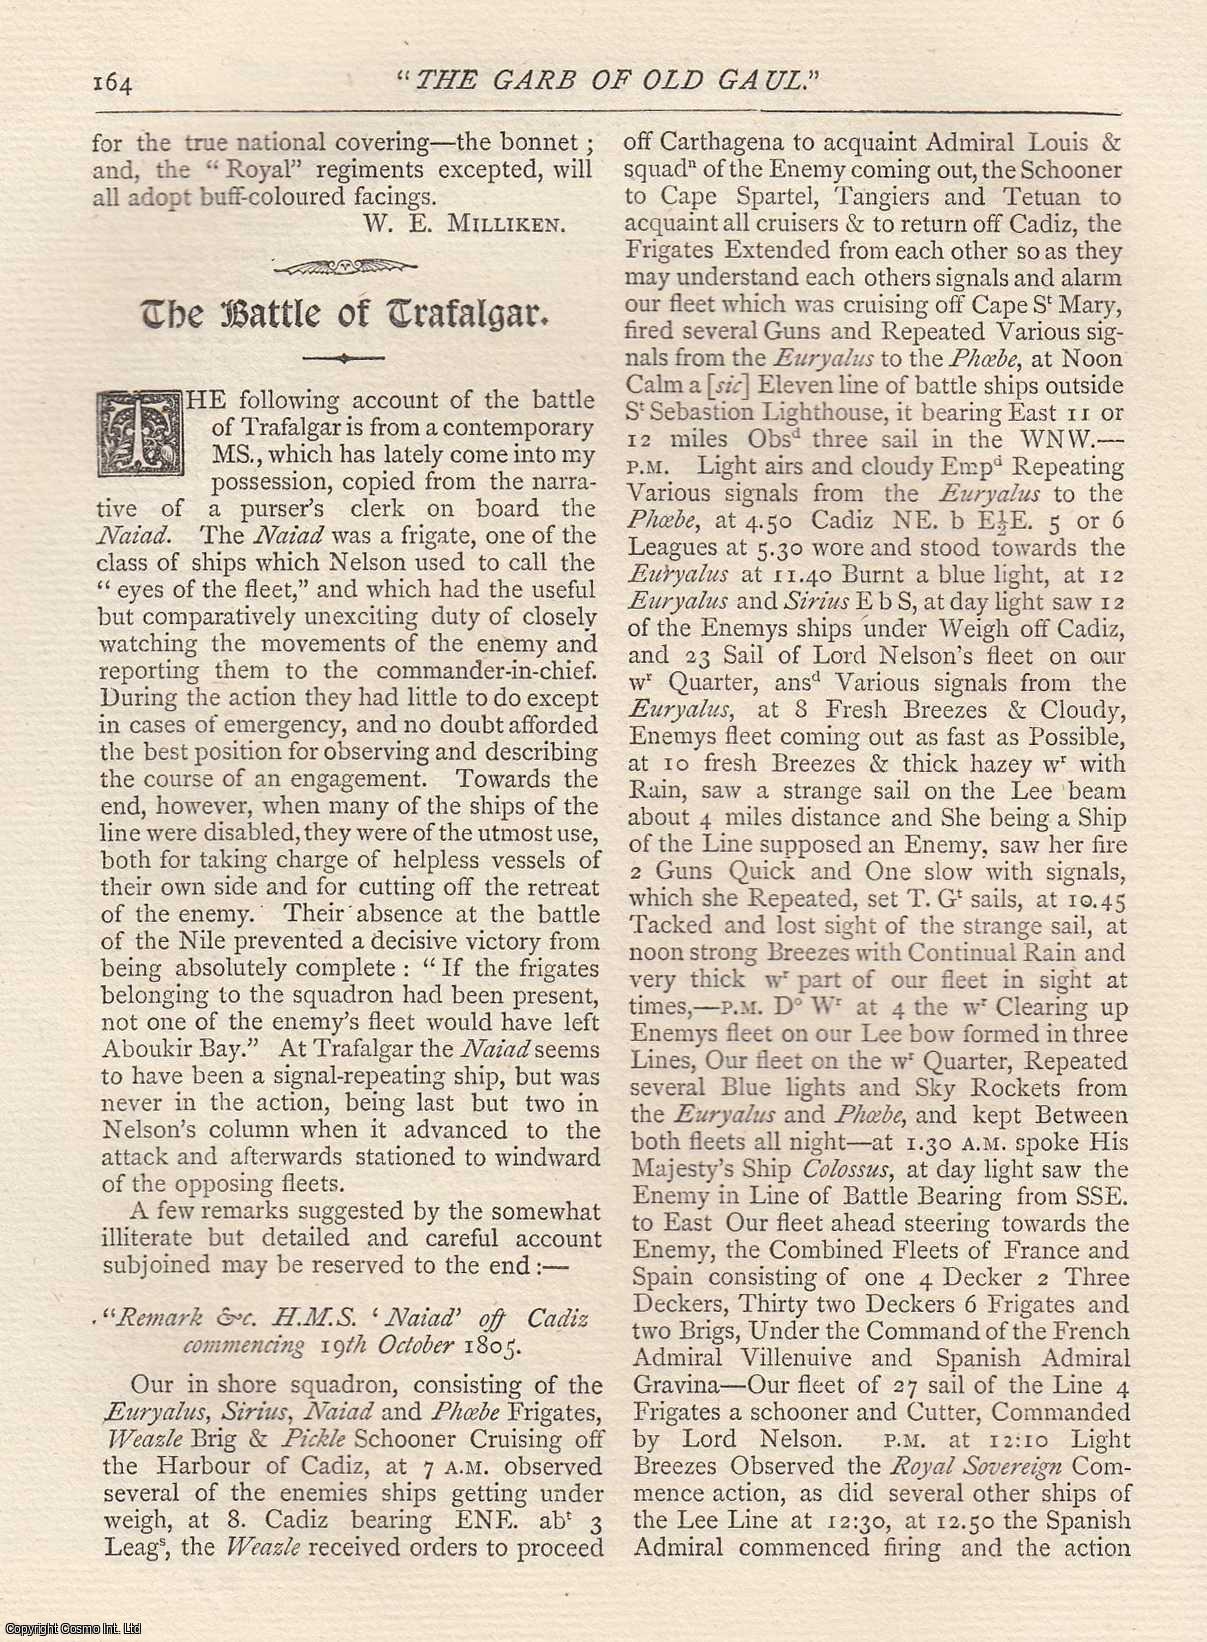 F. Madan - The Battle of Trafalgar. An original article from The Antiquary Magazine, 1881.